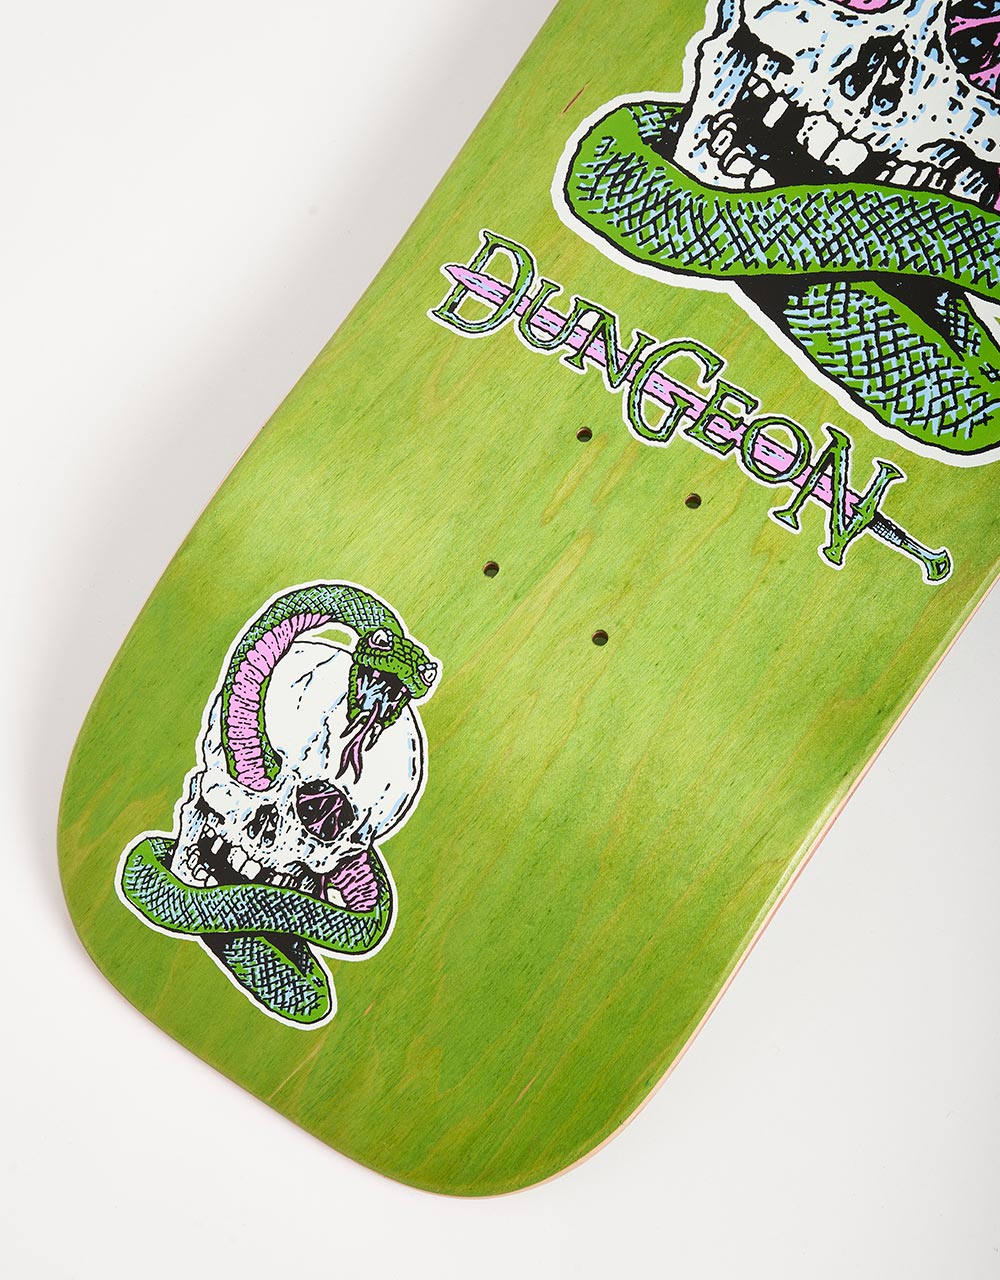 Lovenskate ‘DUNGEON X LNS' Skateboard Deck - 9.5"